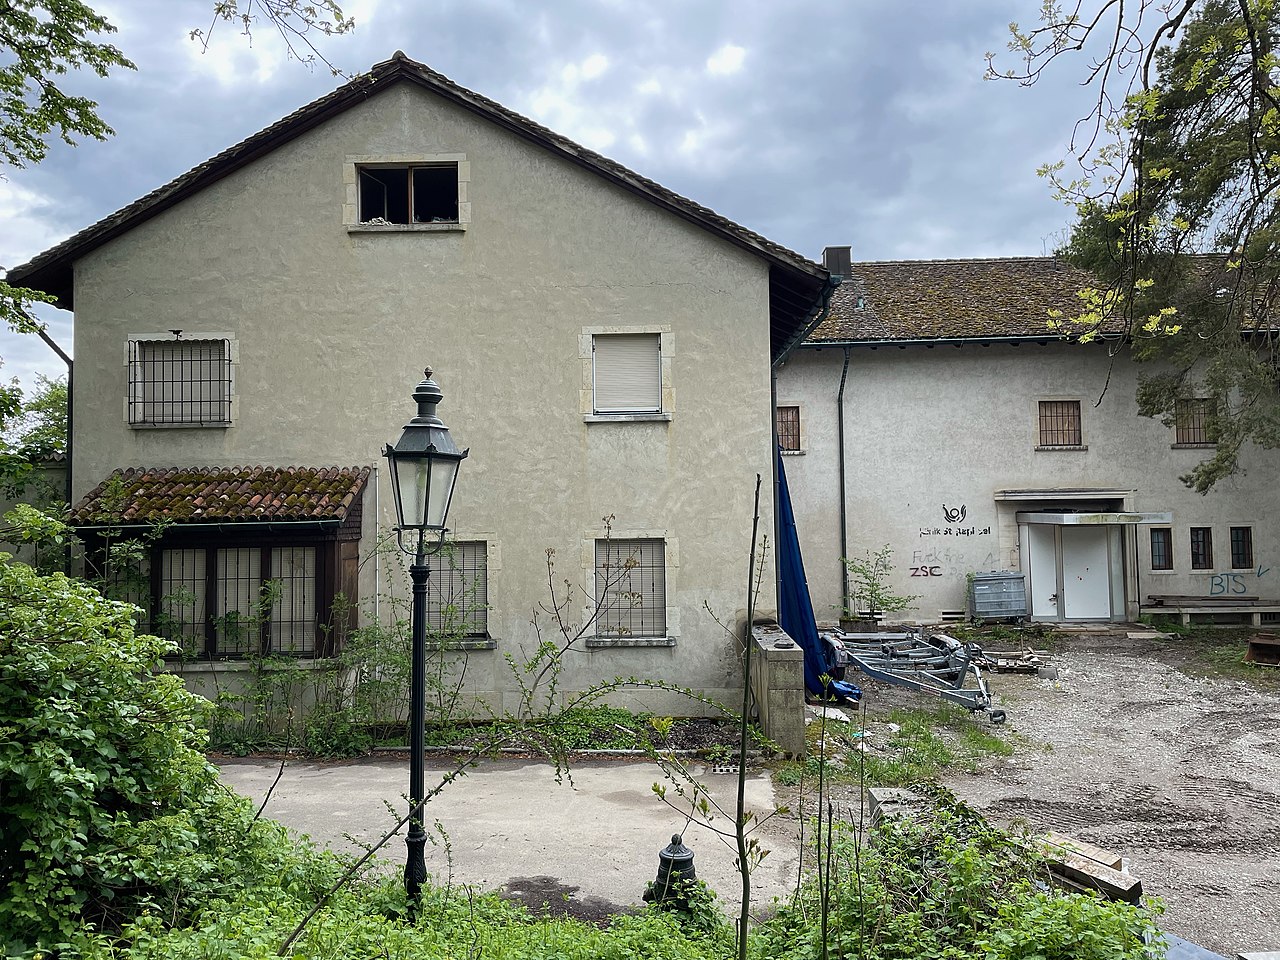 Küsnacht, Villa Nager 2021 (Bild: Adrian Michael, CC BY-SA 3.0)